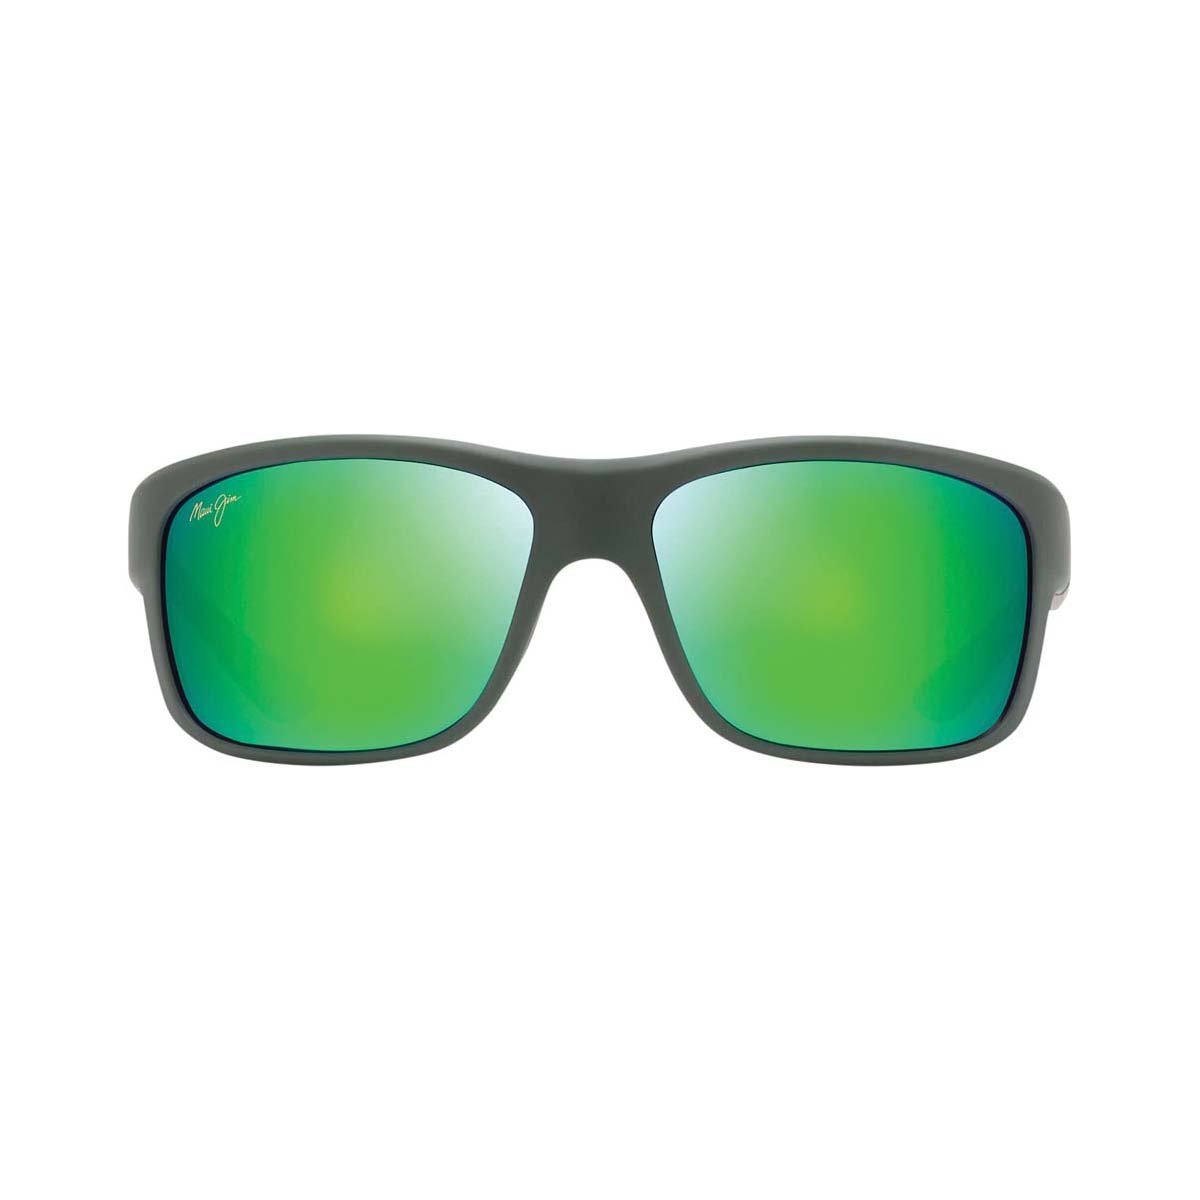 Maui Jim Men's Southern Cross Sunglasses with Green Mirror